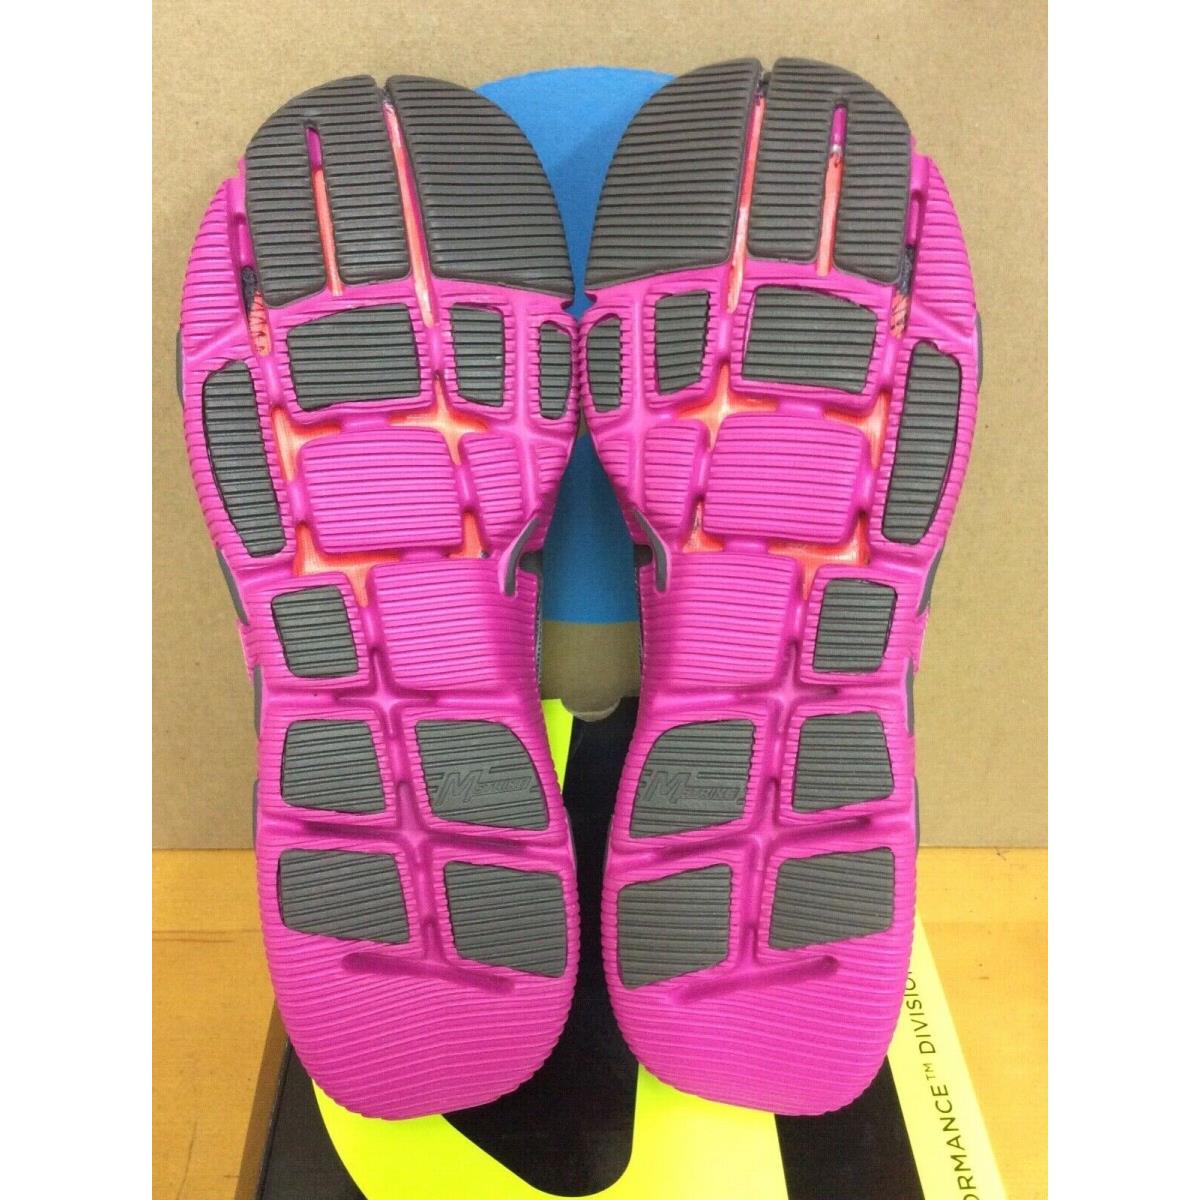 Skechers shoes Bionic Ride - Charcoal Hot Pink 4